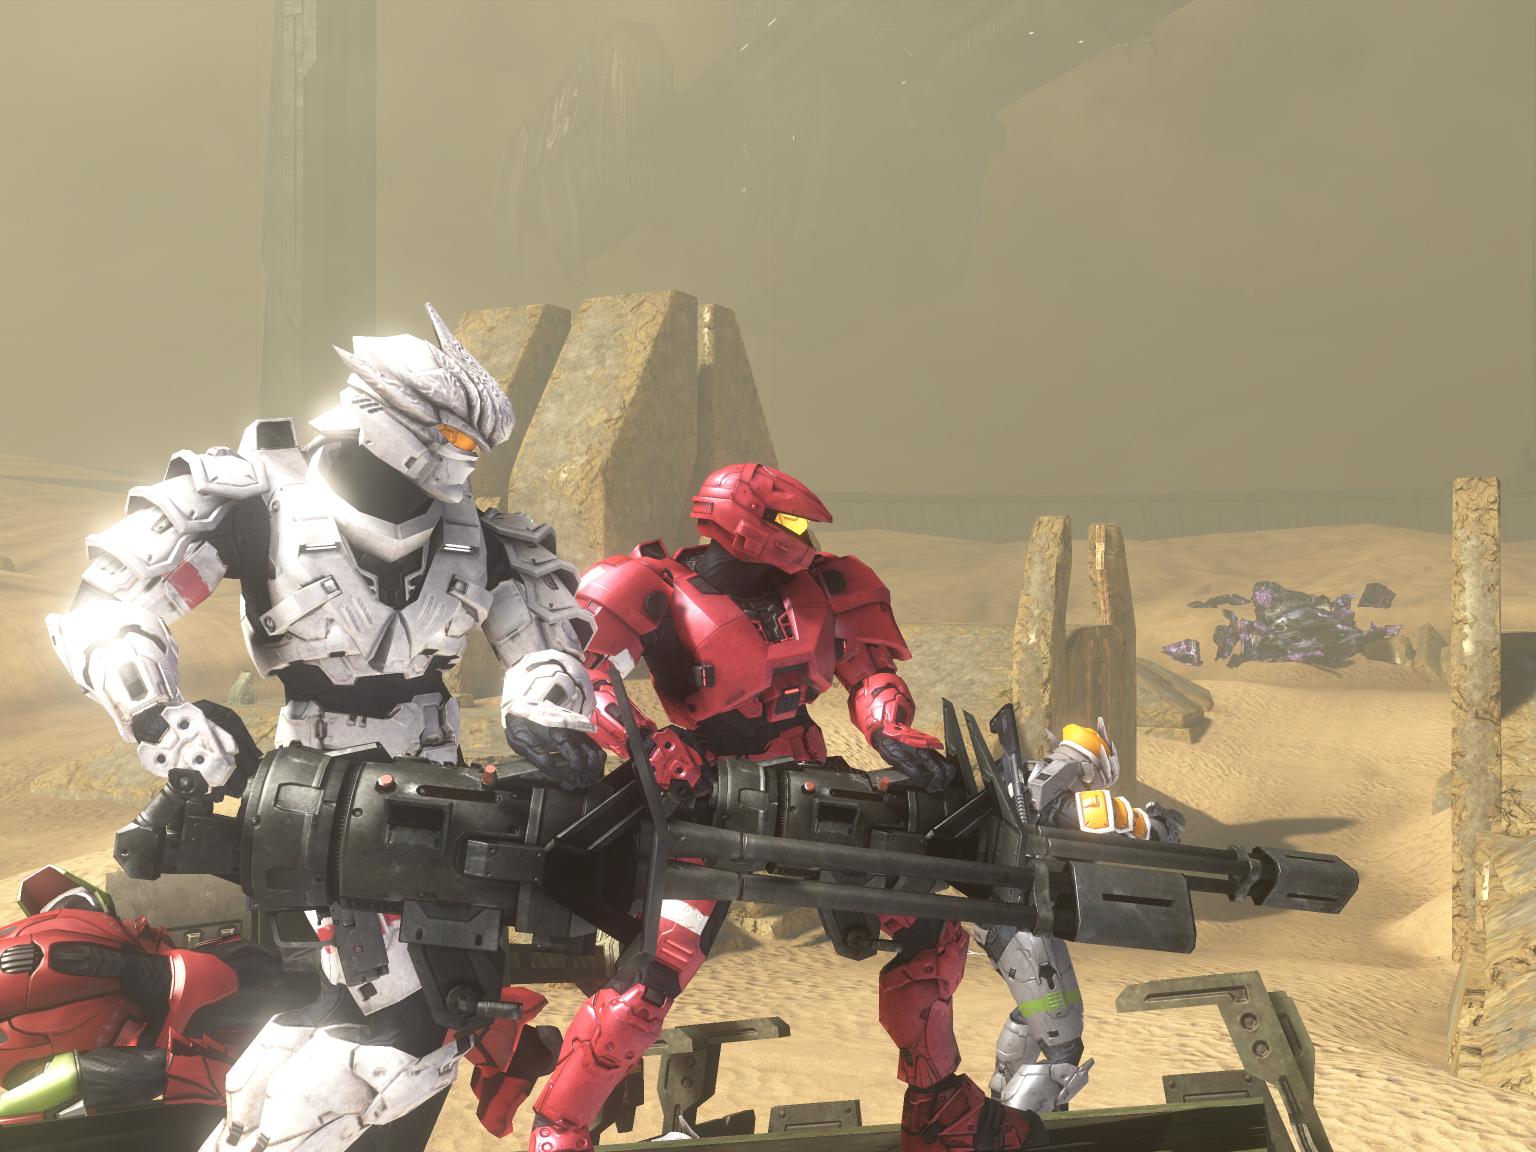 Halo 3 Screen Shots part 2